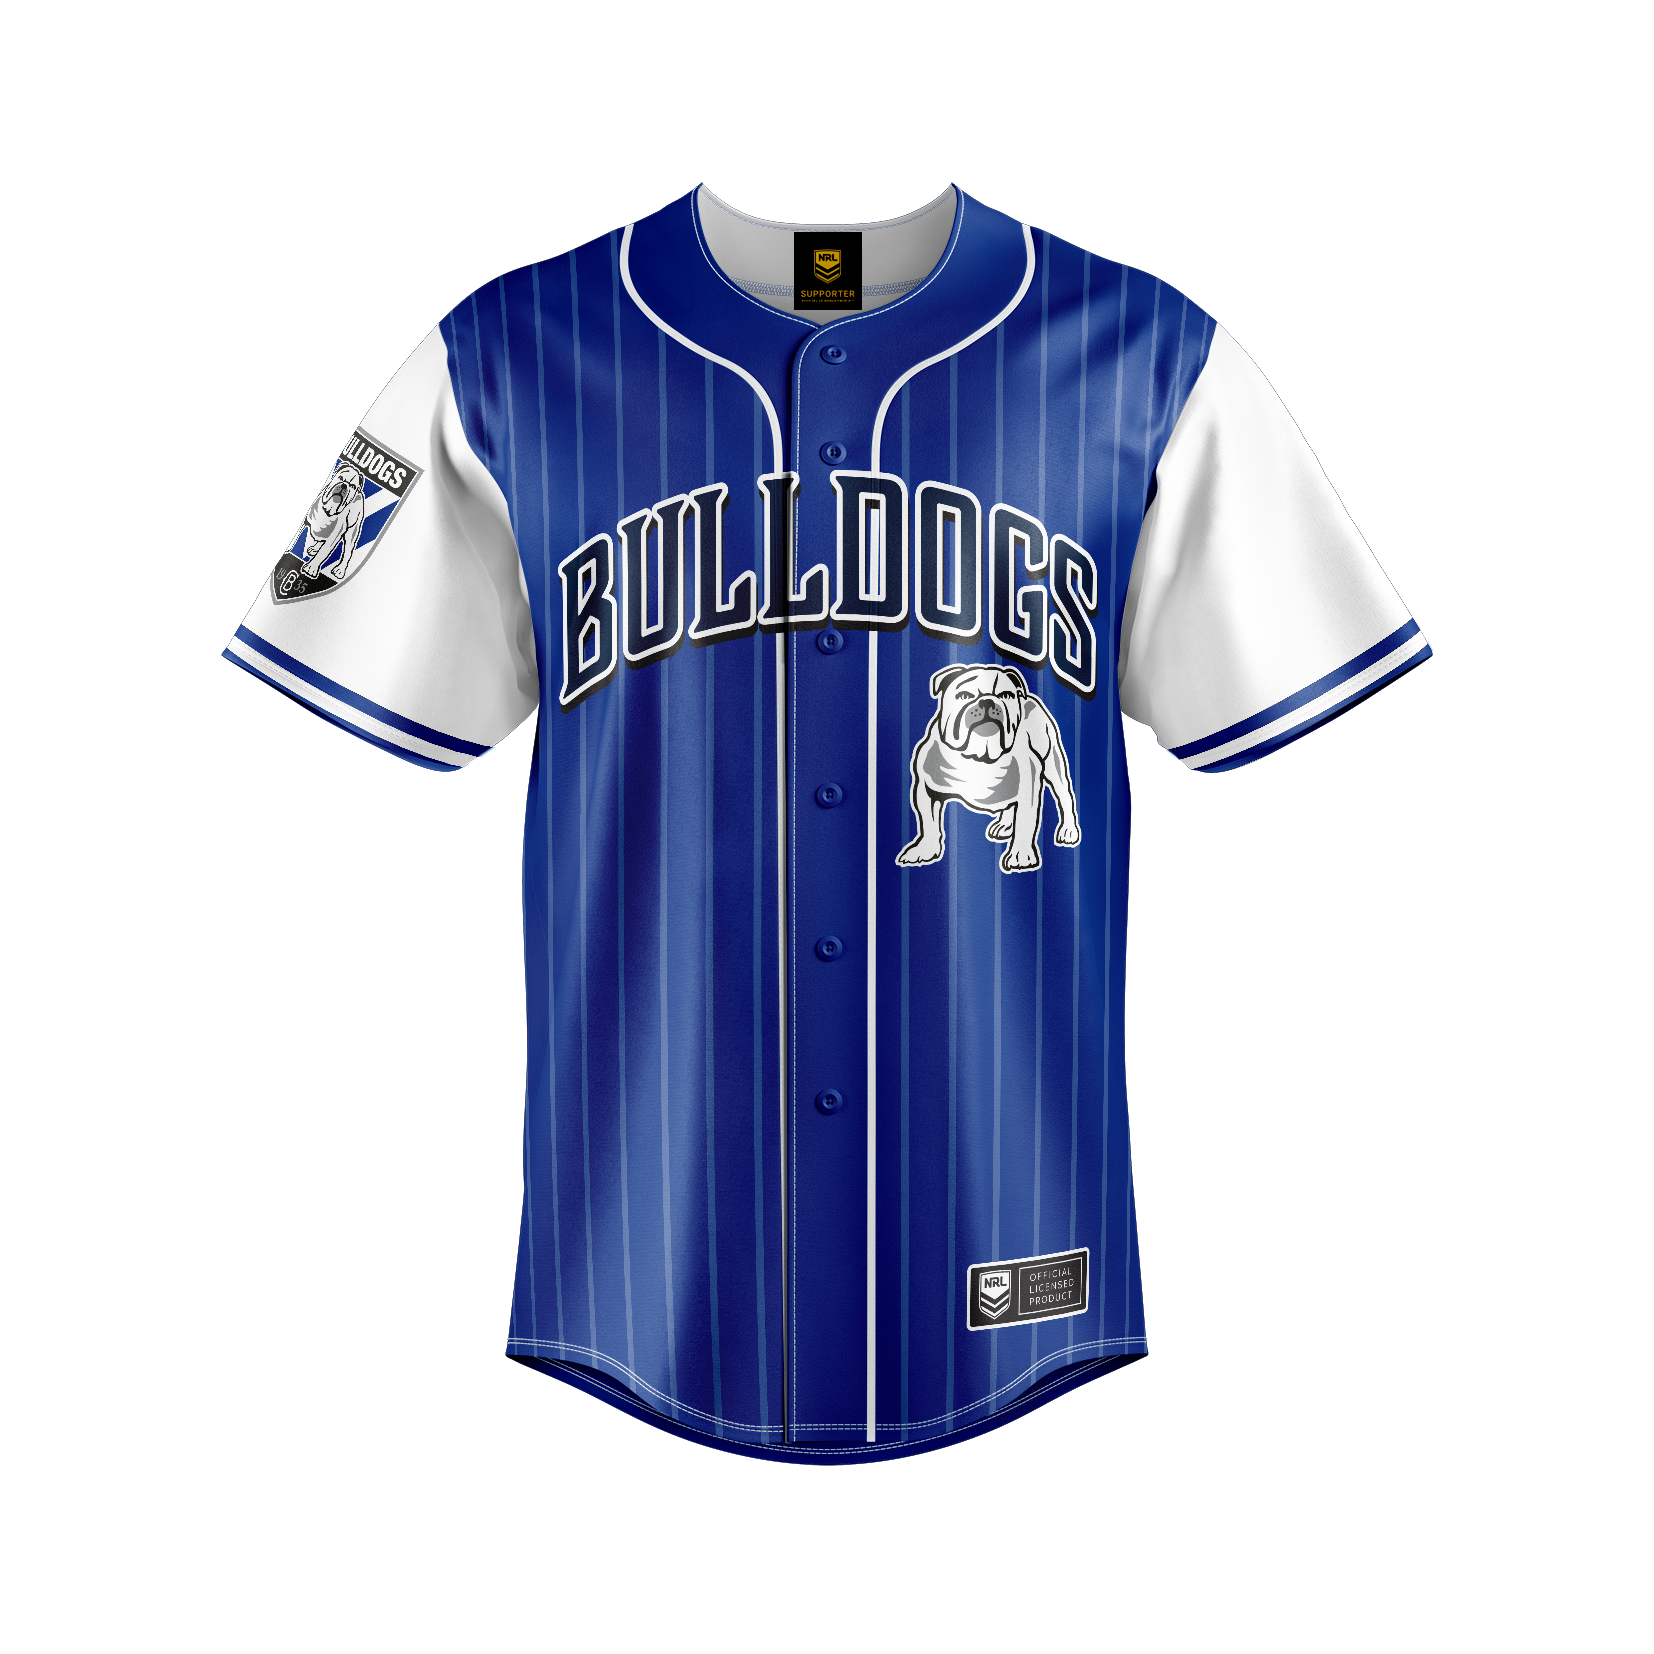 Canterbury Bulldogs "Slugger" Baseball Shirt